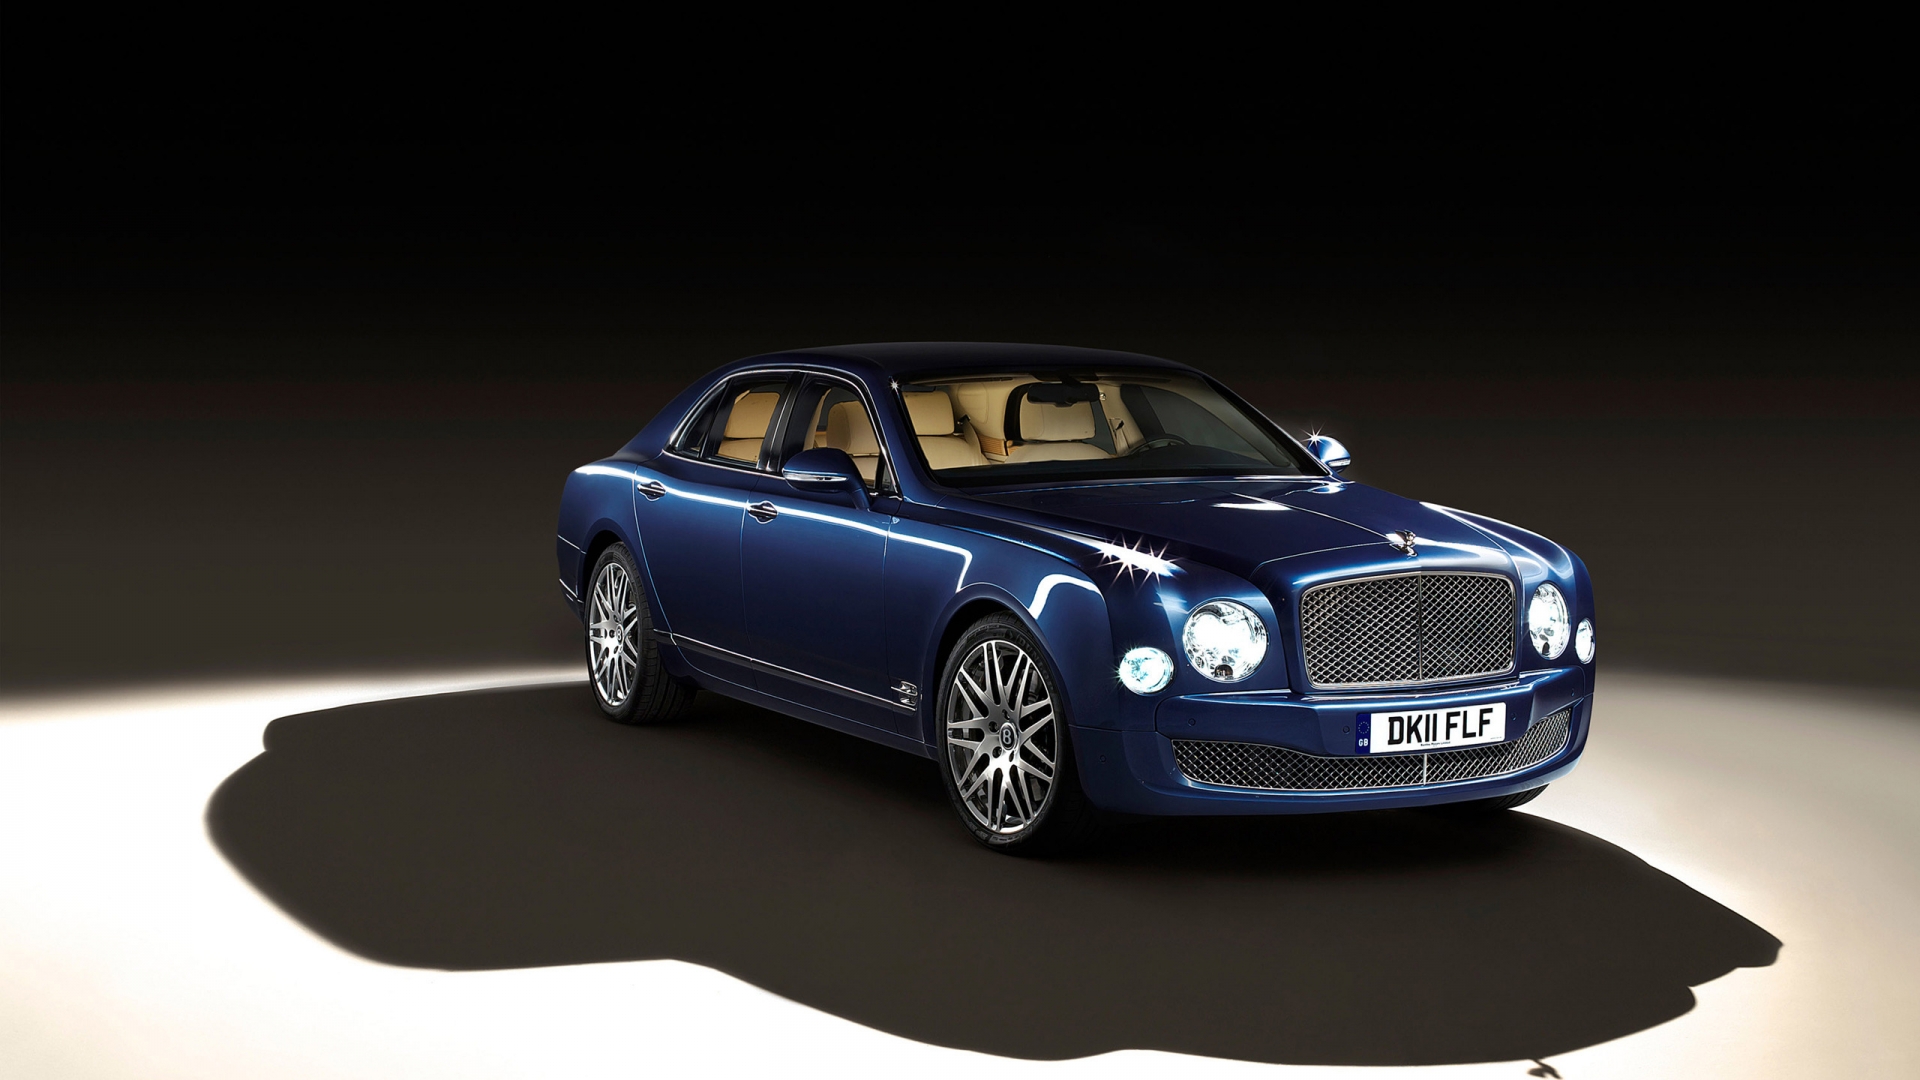 2012 Bentley Mulsanne Executive for 1920 x 1080 HDTV 1080p resolution